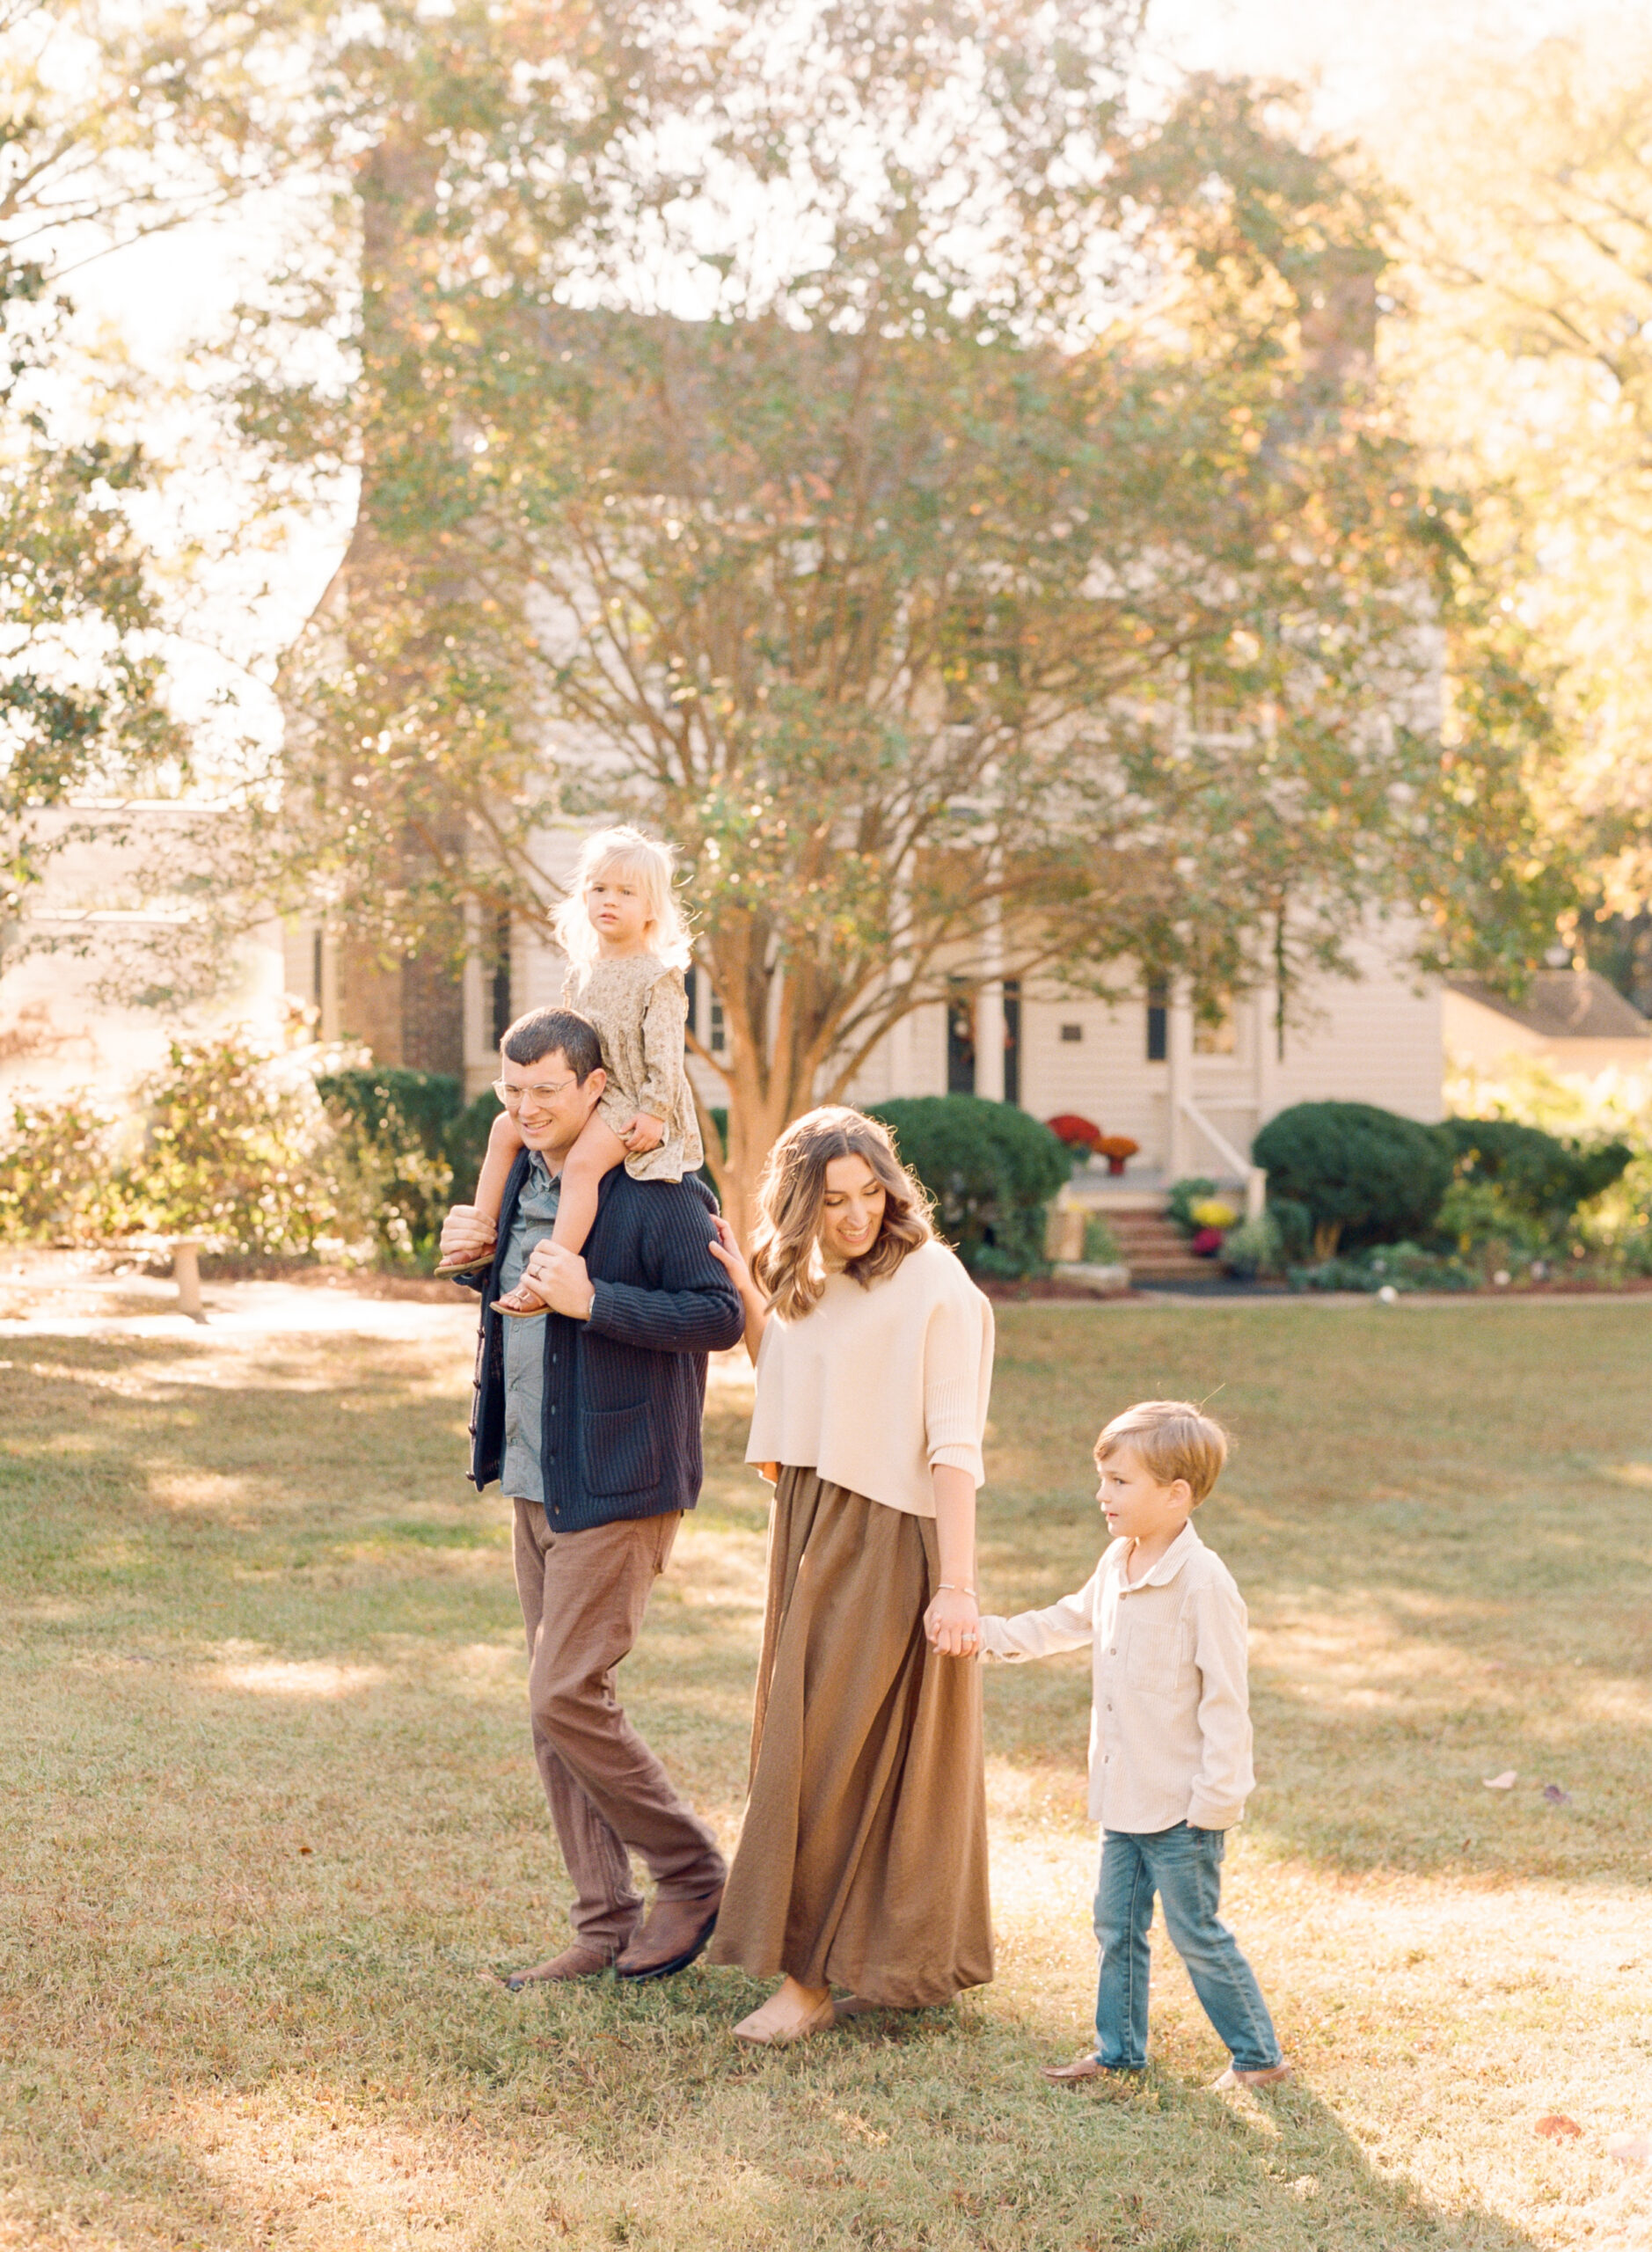 Family walking while holding hands. Tips for Family Photography by Raleigh family photographer A.J. Dunlap.